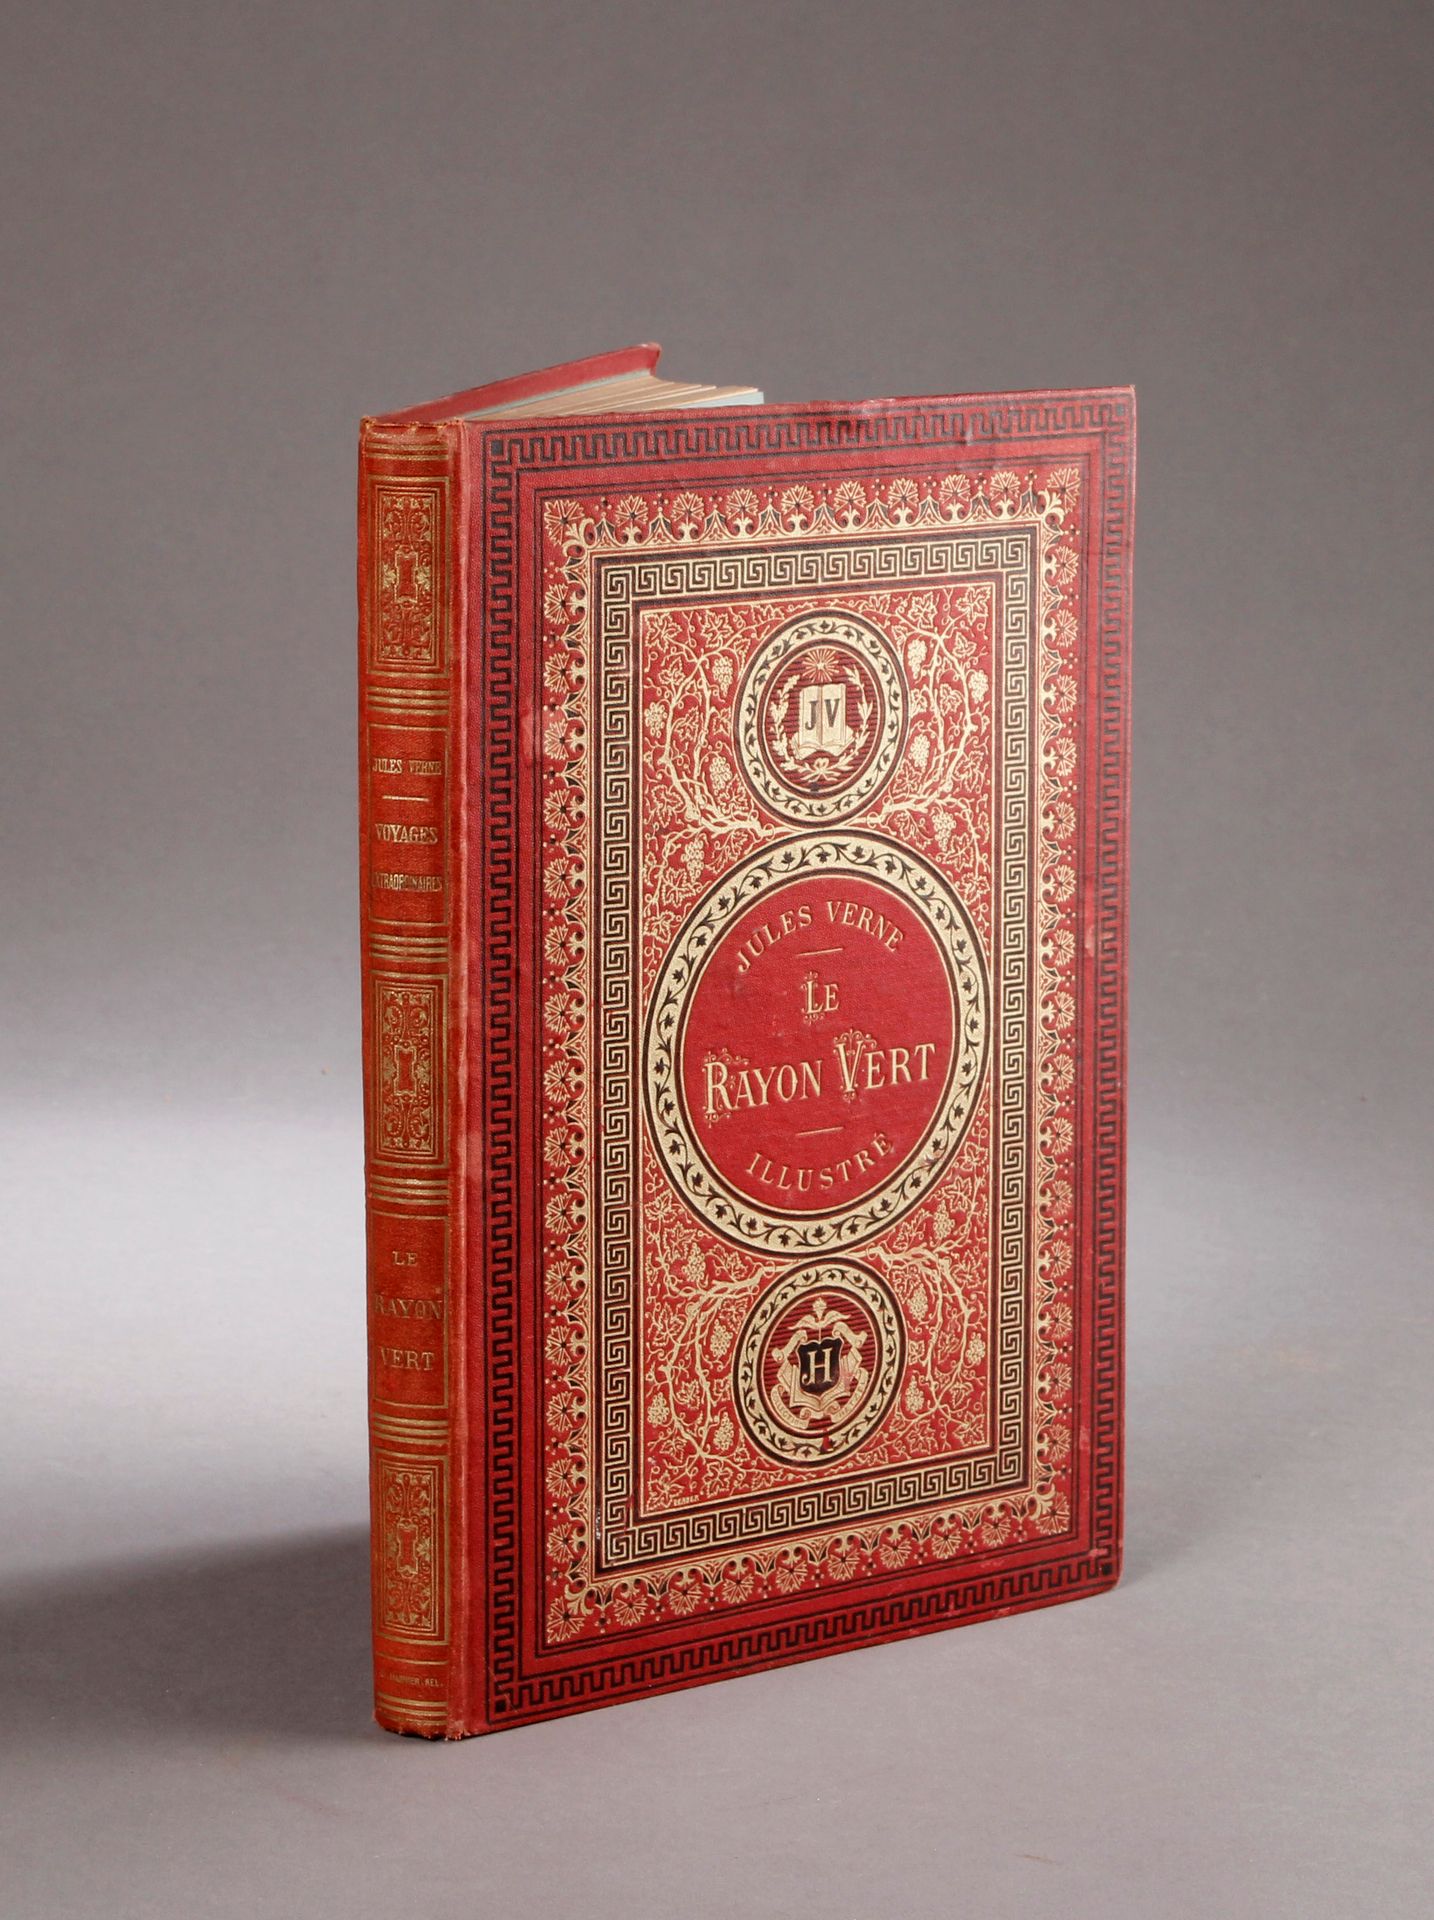 Jules VERNE / HETZEL. Le Rayon Vert (1882).
Cartone rosso con le iniziali Ch. Ma&hellip;